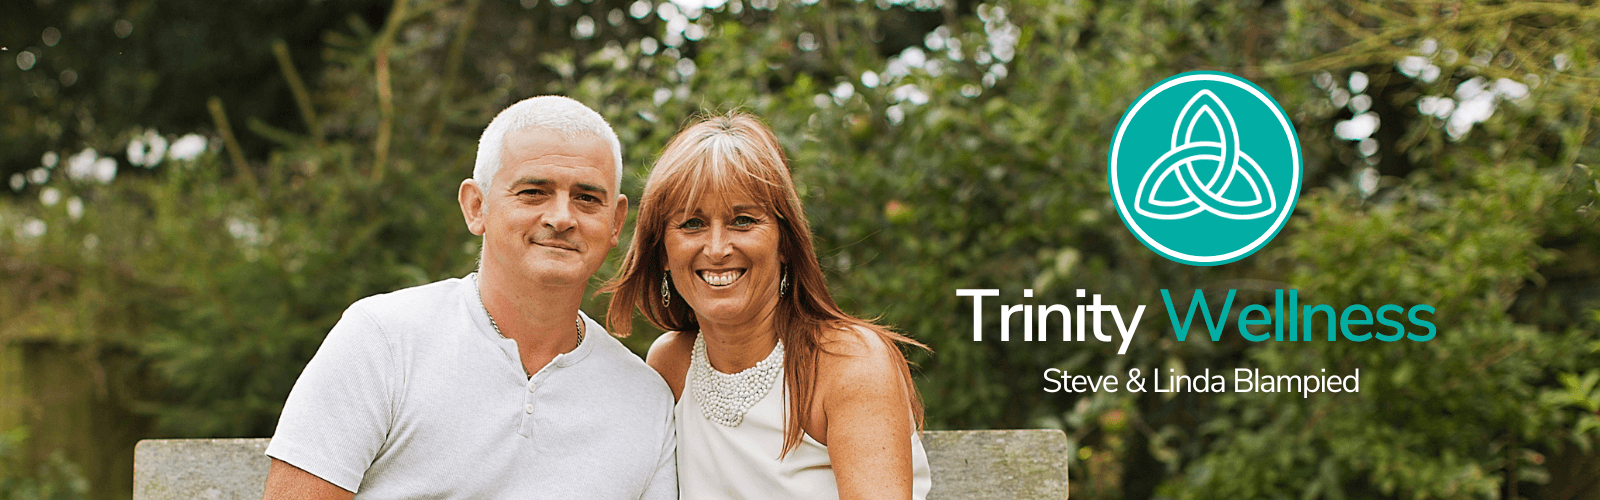 Trinity Wellness - Steve & Linda Blampied Hero Image